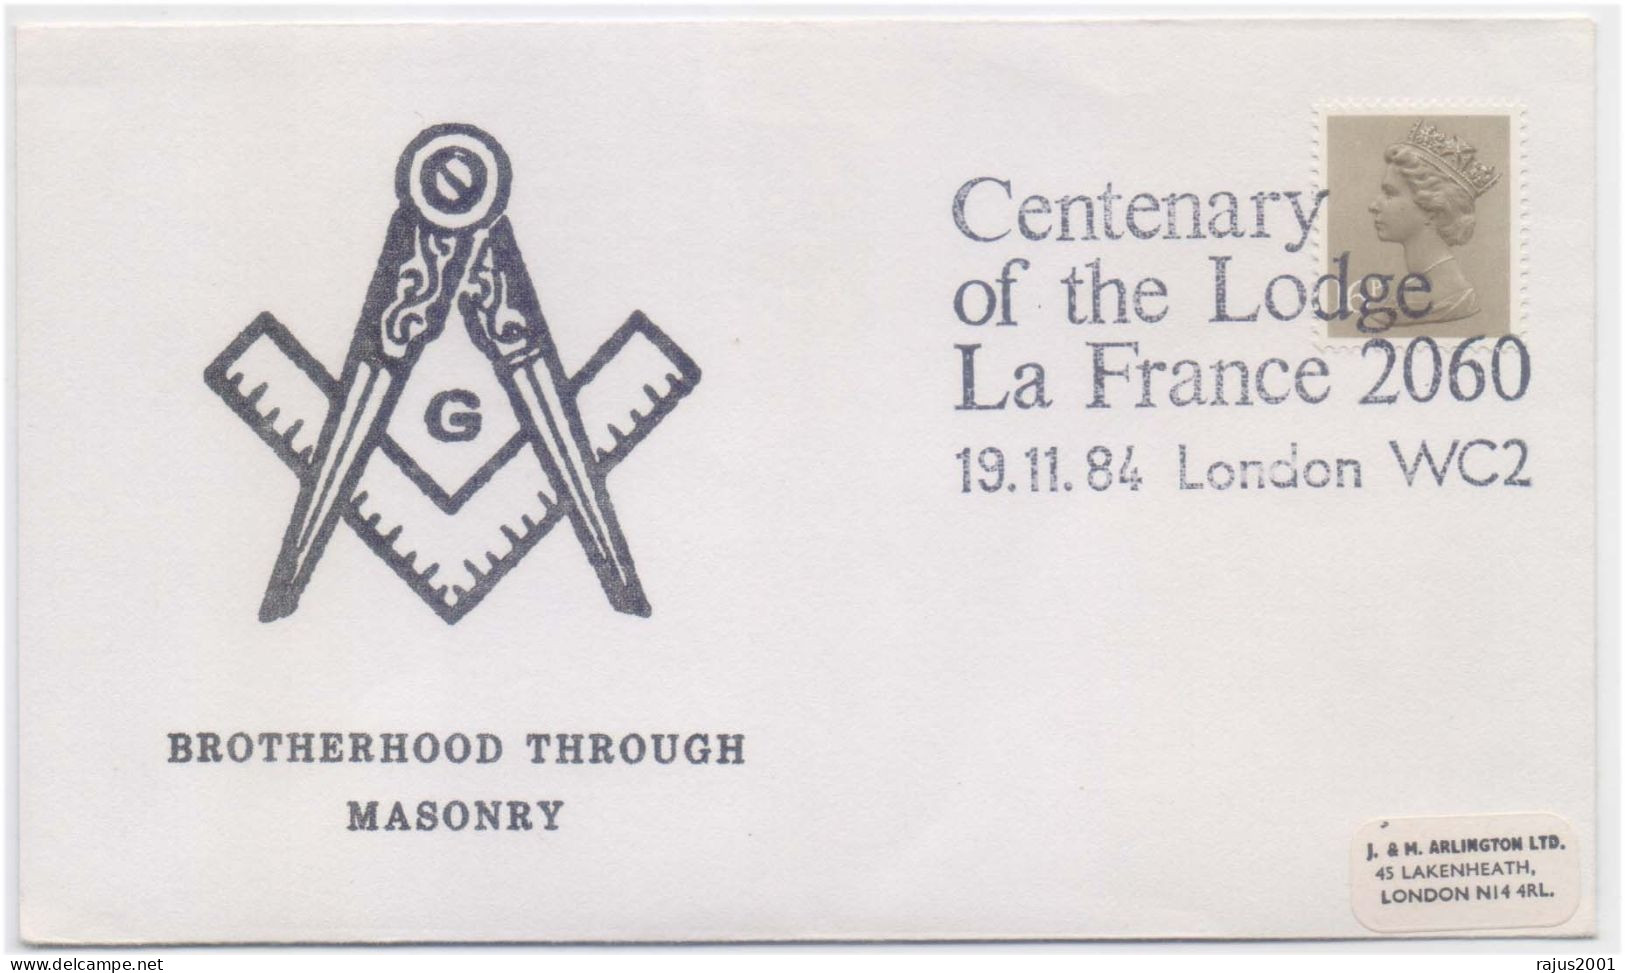 Centenary Of The Lodge Of France 2060, Brotherhood Through Masonry, Freemasonry, Masonic Britain FDC - Freemasonry